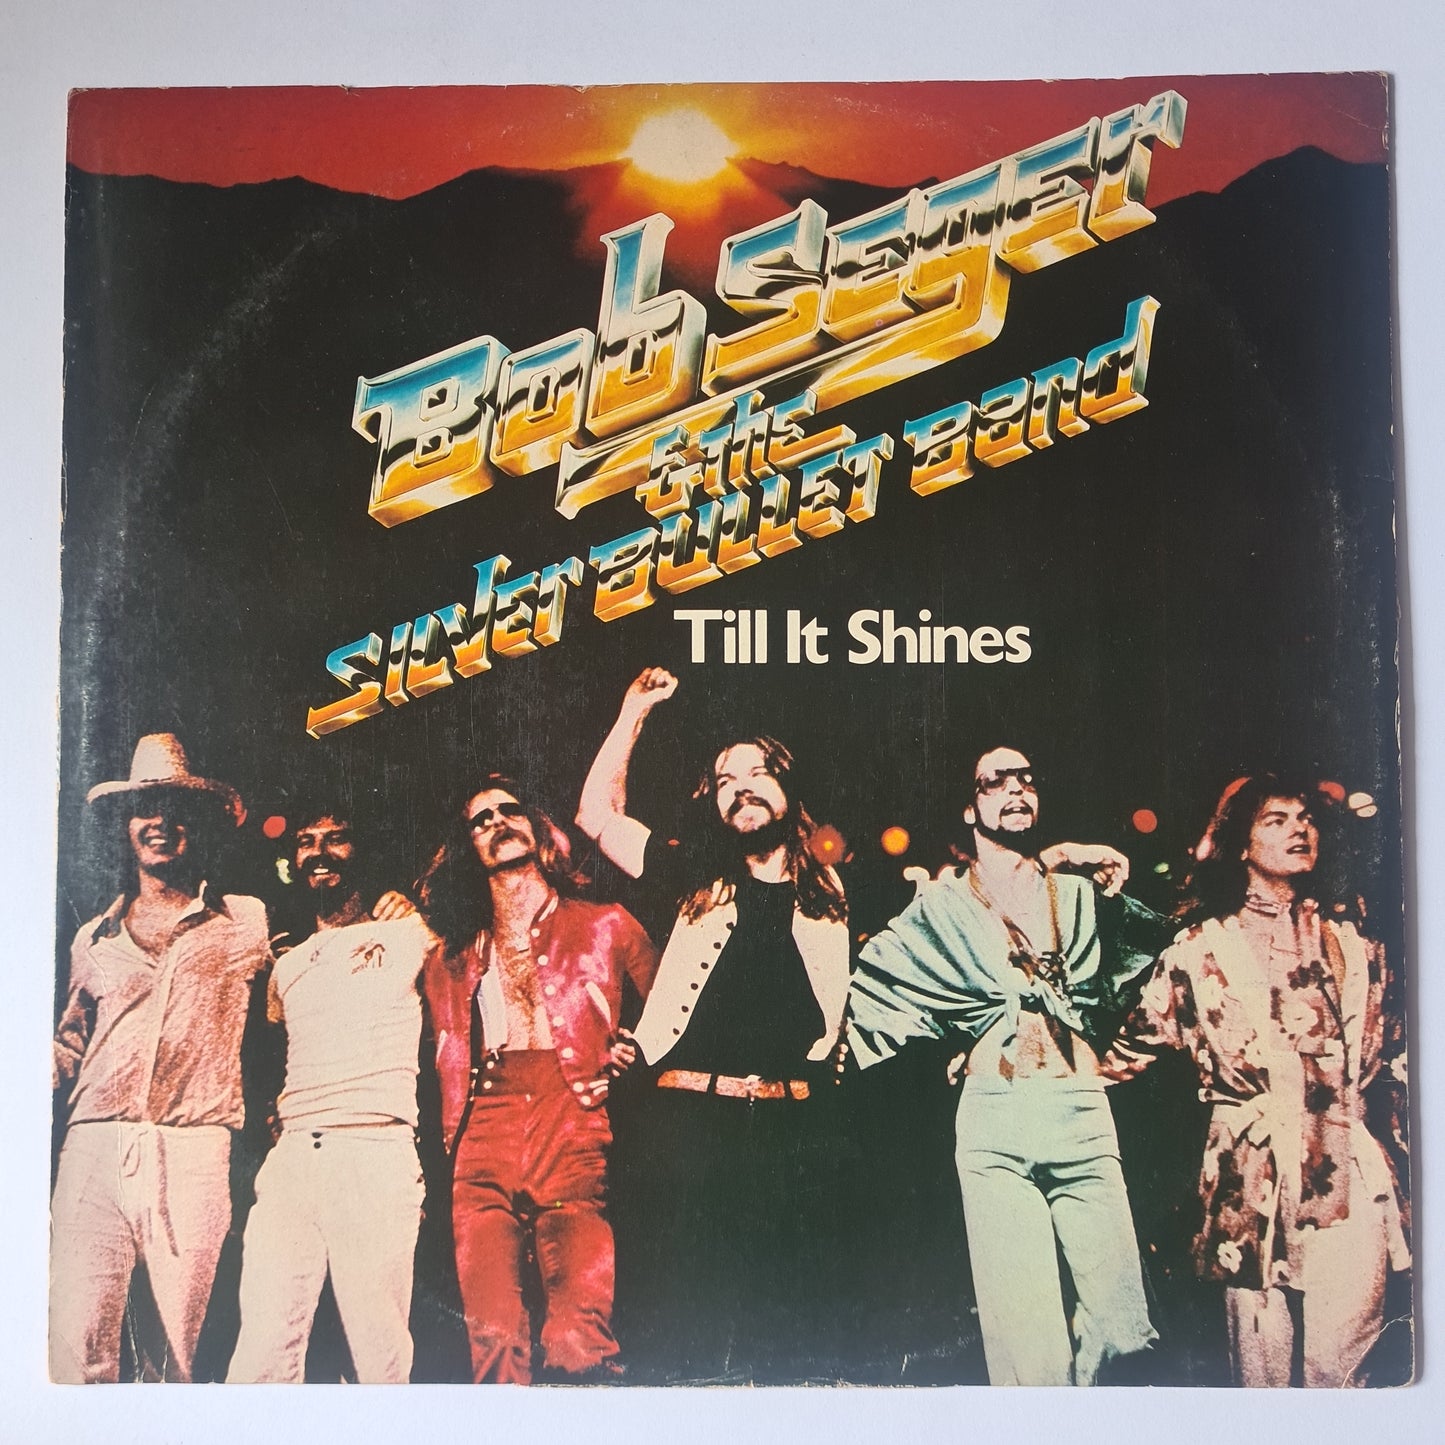 Bob Seger & The Silver Bullet Band – Till It Shines (Maxi Single) - 1978 - Vinyl Record